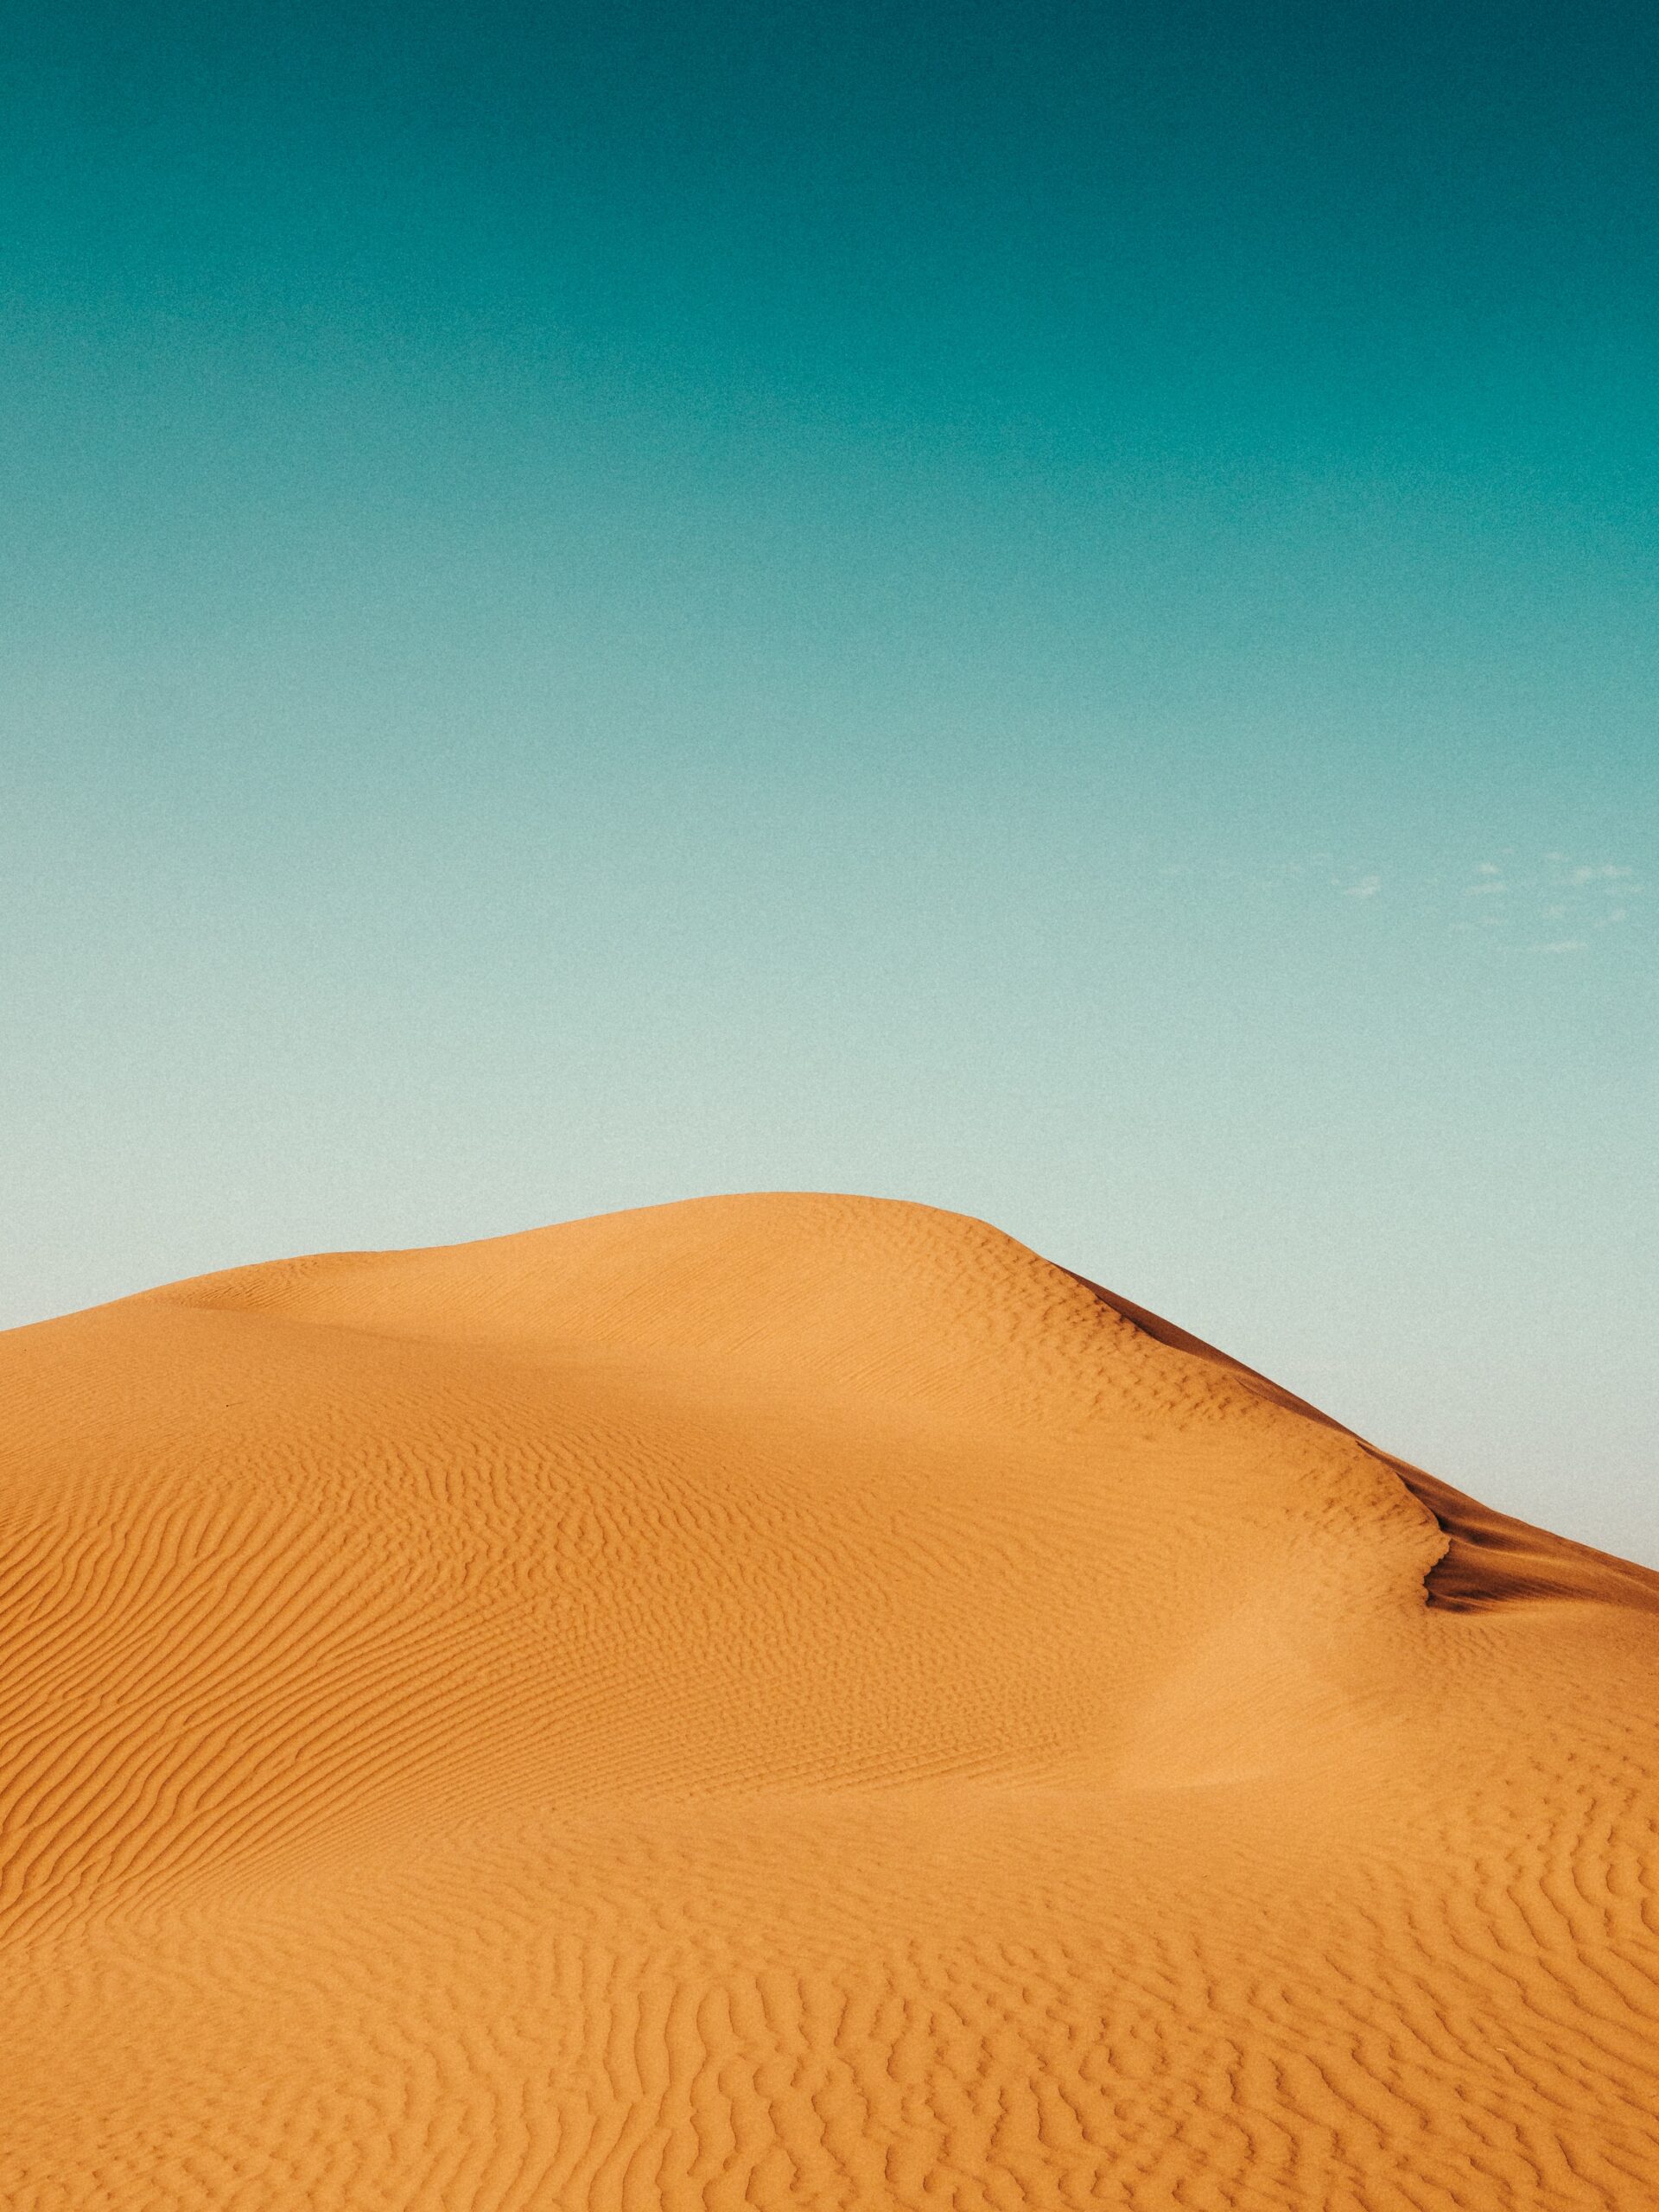 The Majestic Desert of Arabia